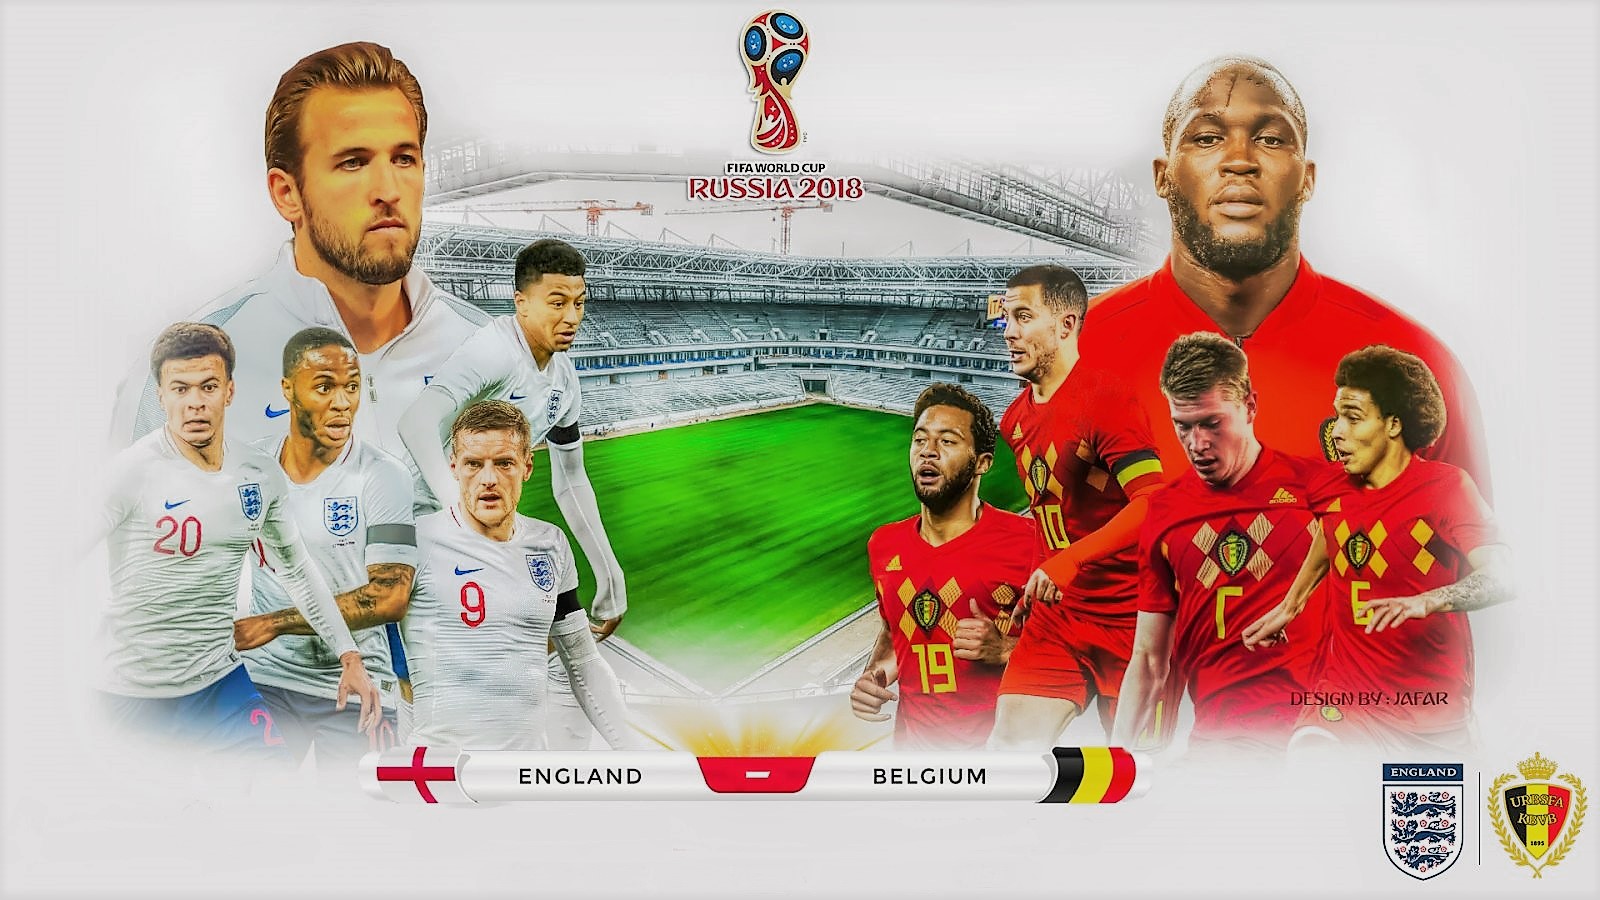 england_belgium_world_cup_2018-1600x900.jpg